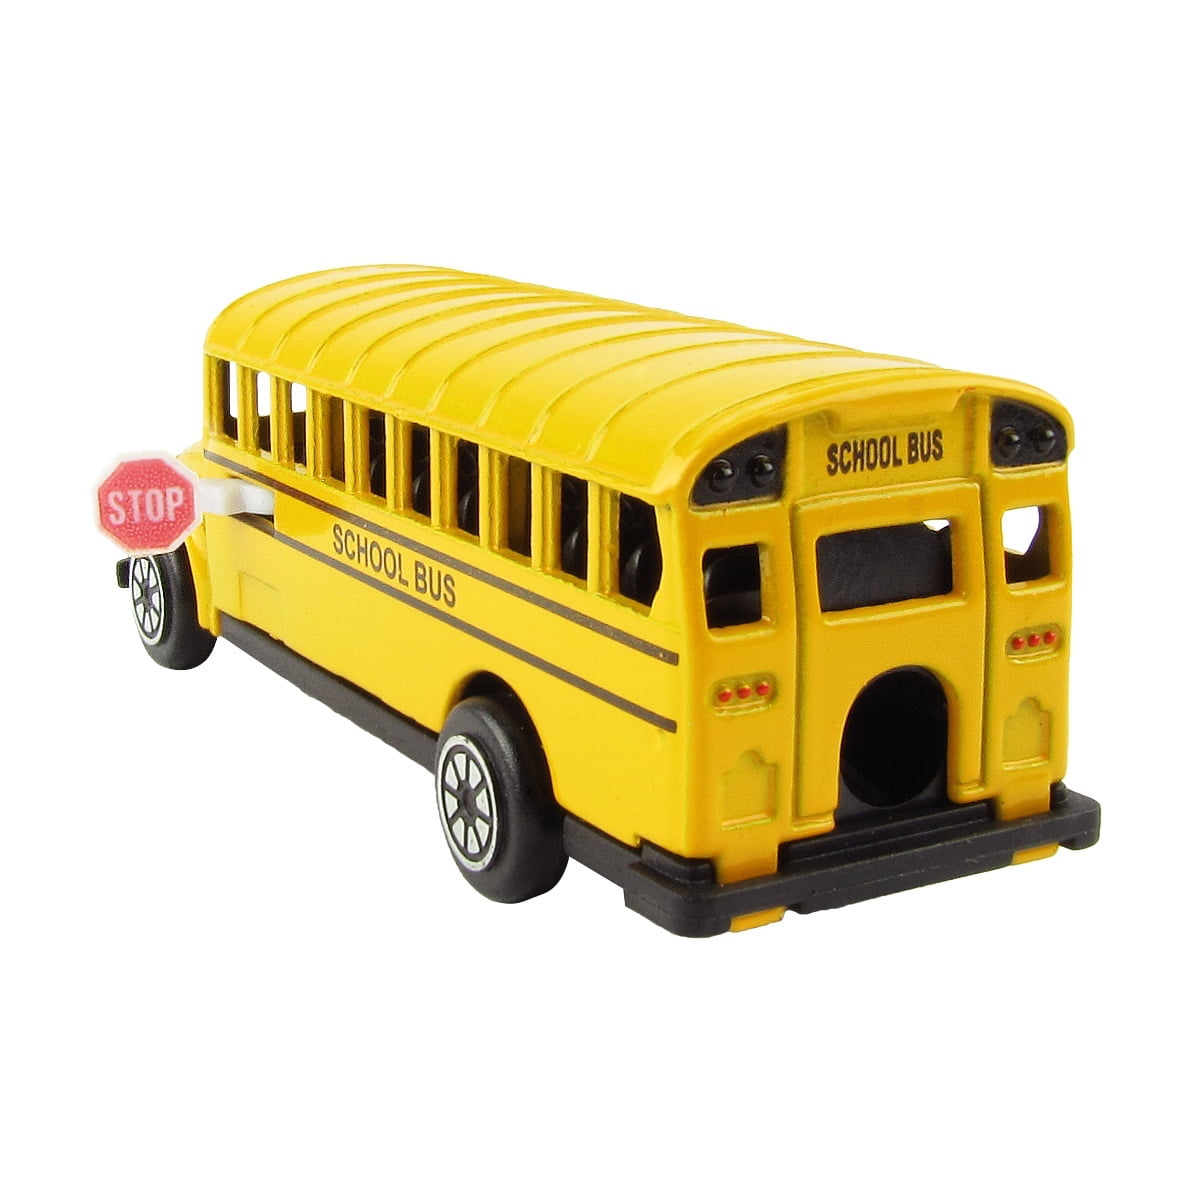 1:87 Scale HO Gauge Miniature School Bus Model Train Accessory Pencil Sharpener 